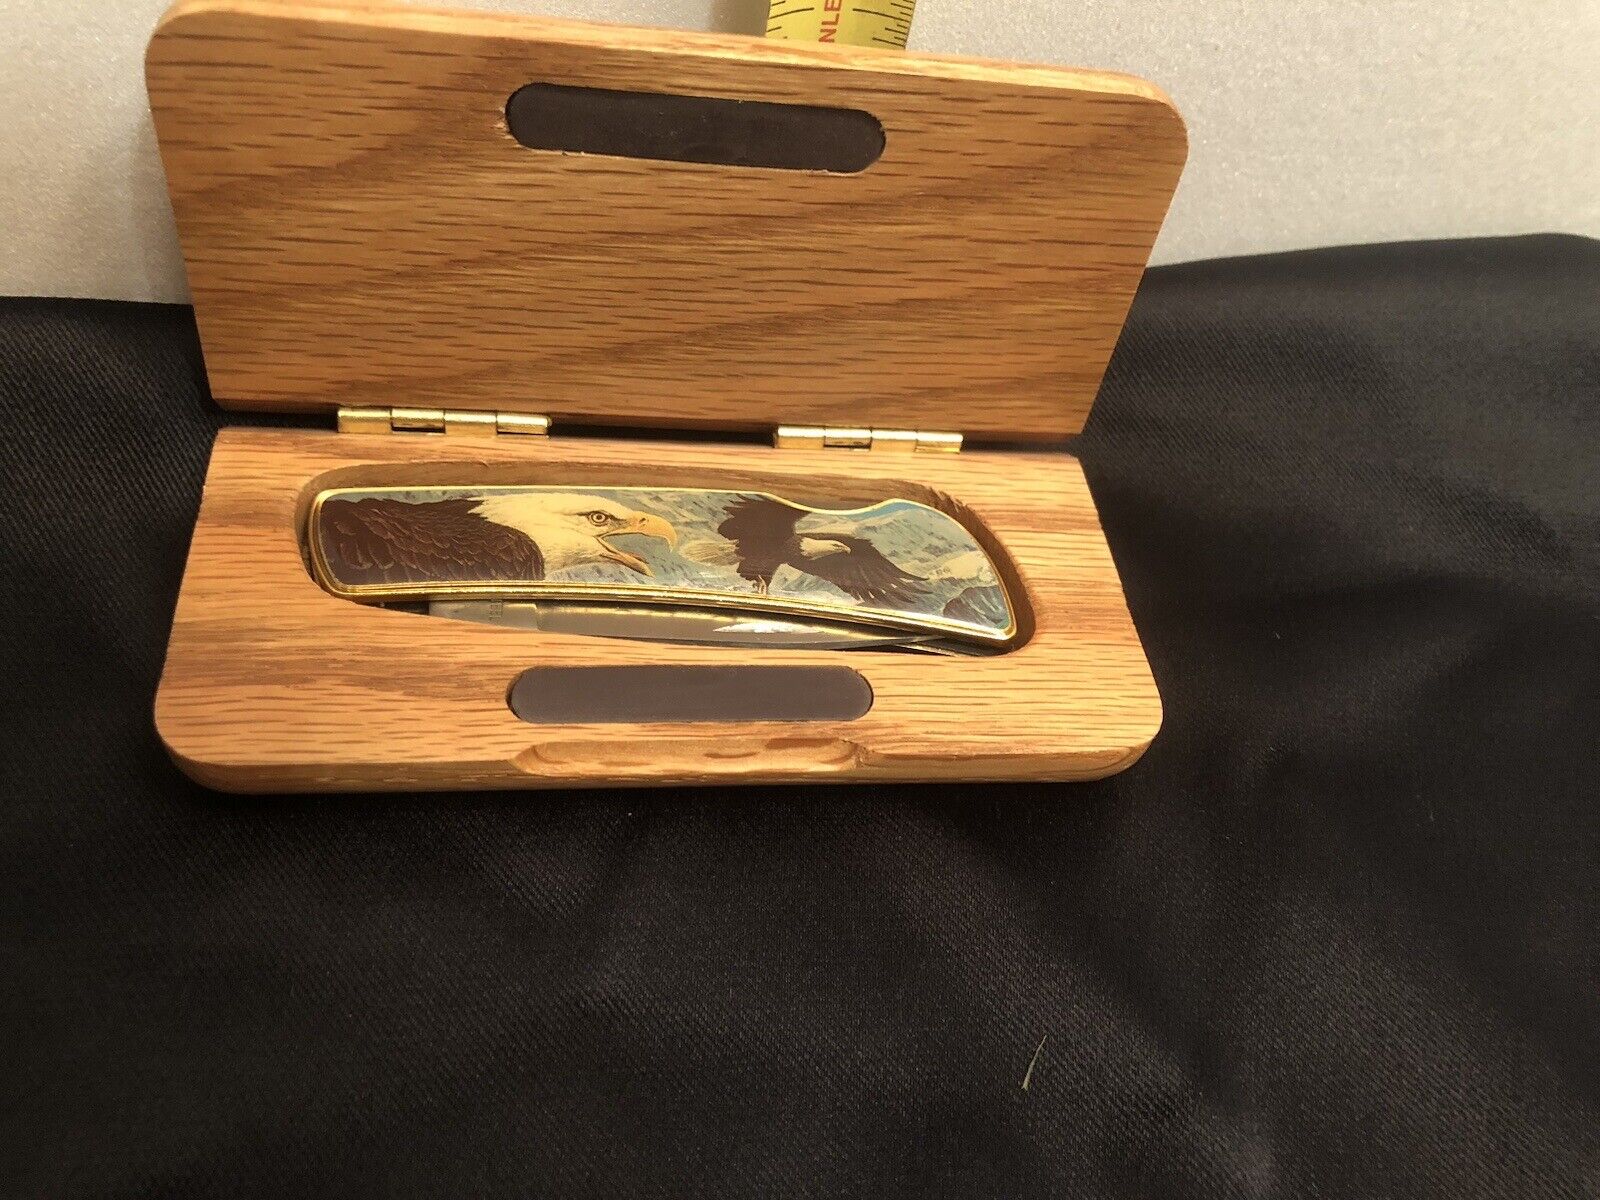 Vintage Pocket Knife With Wooden Case - Bald Eagle Stainless Steel